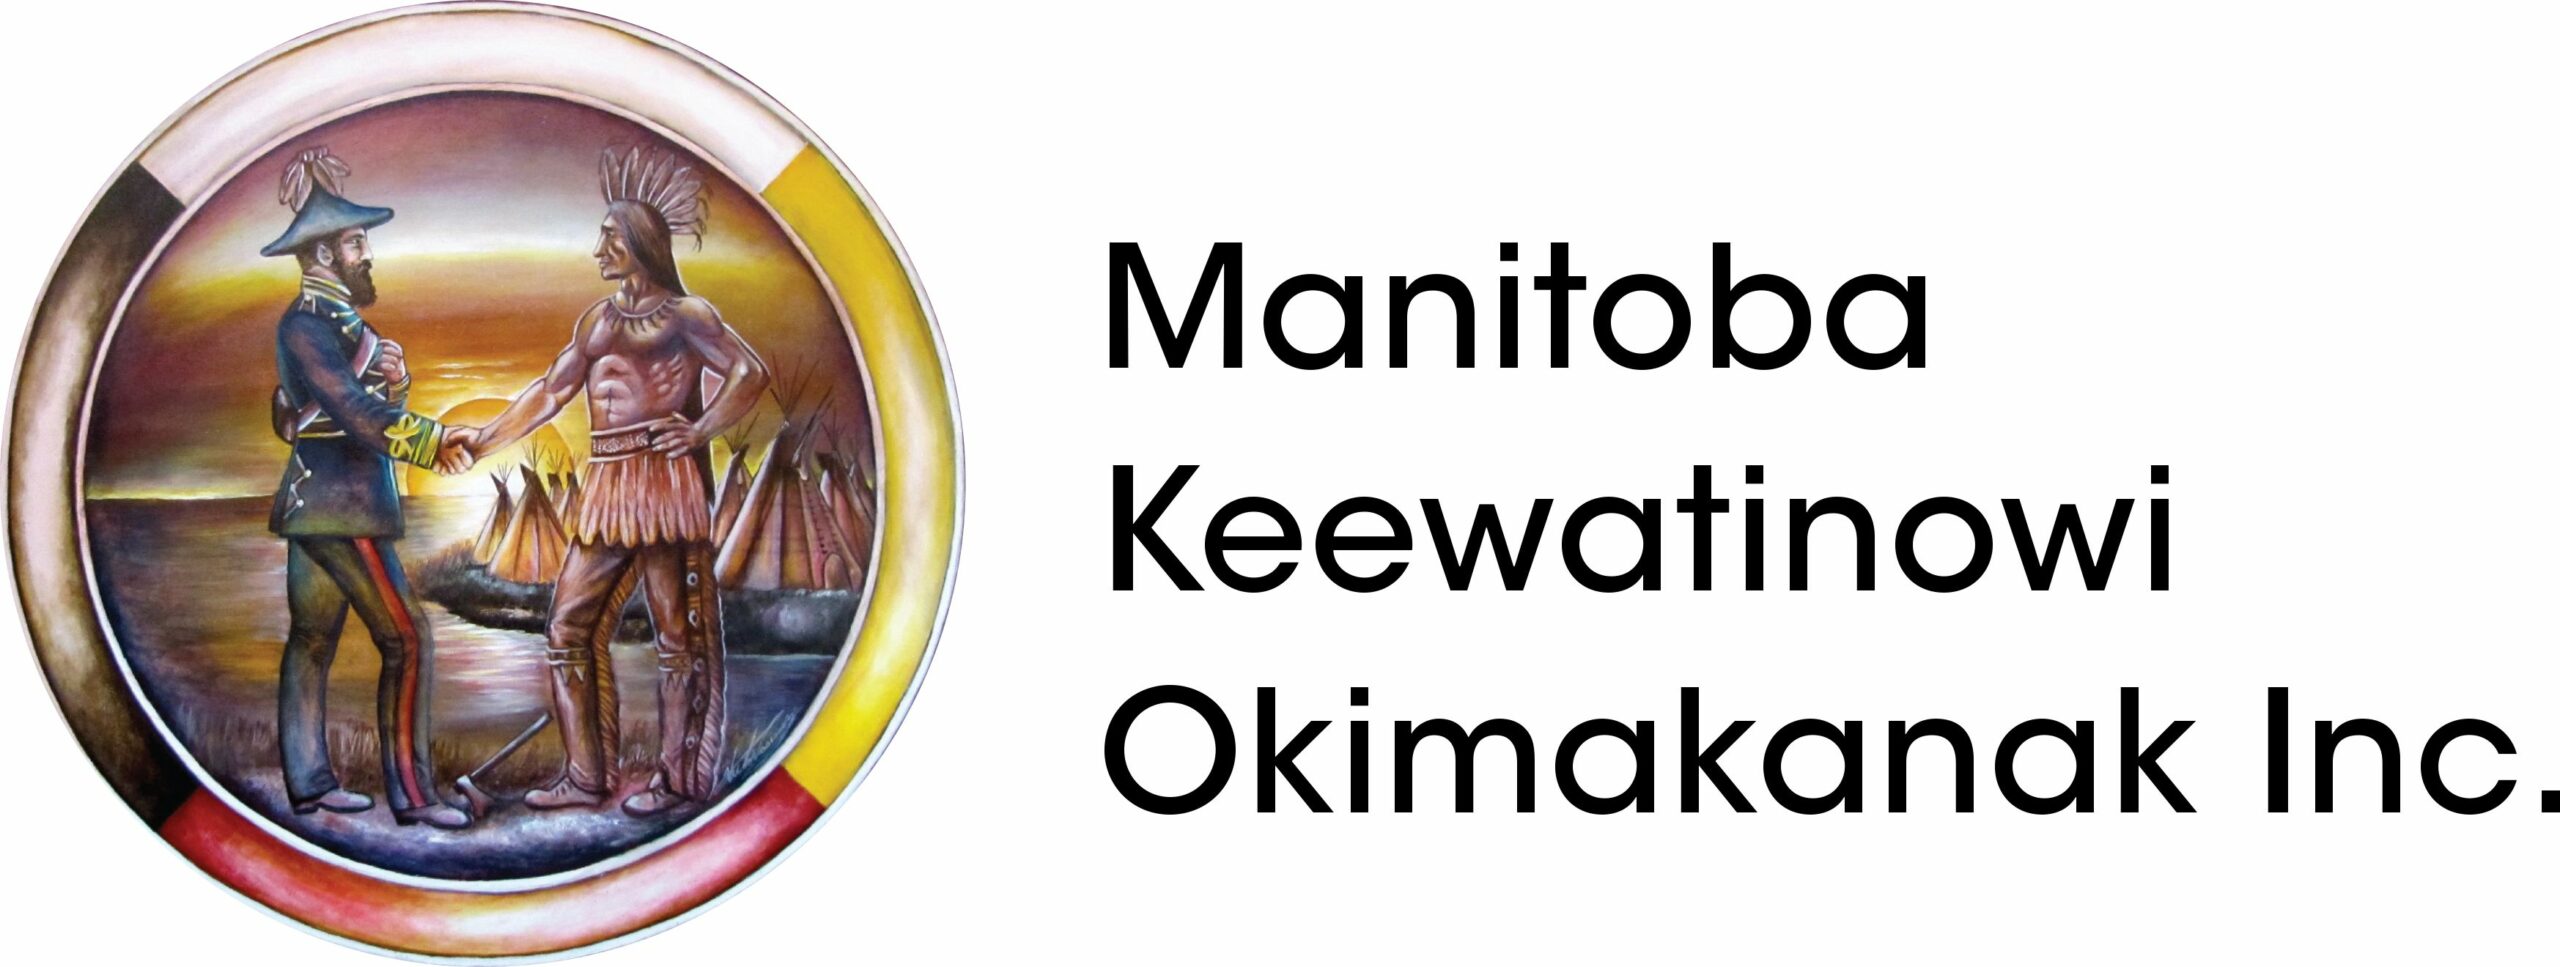 Manitoba Keewatinowi logo